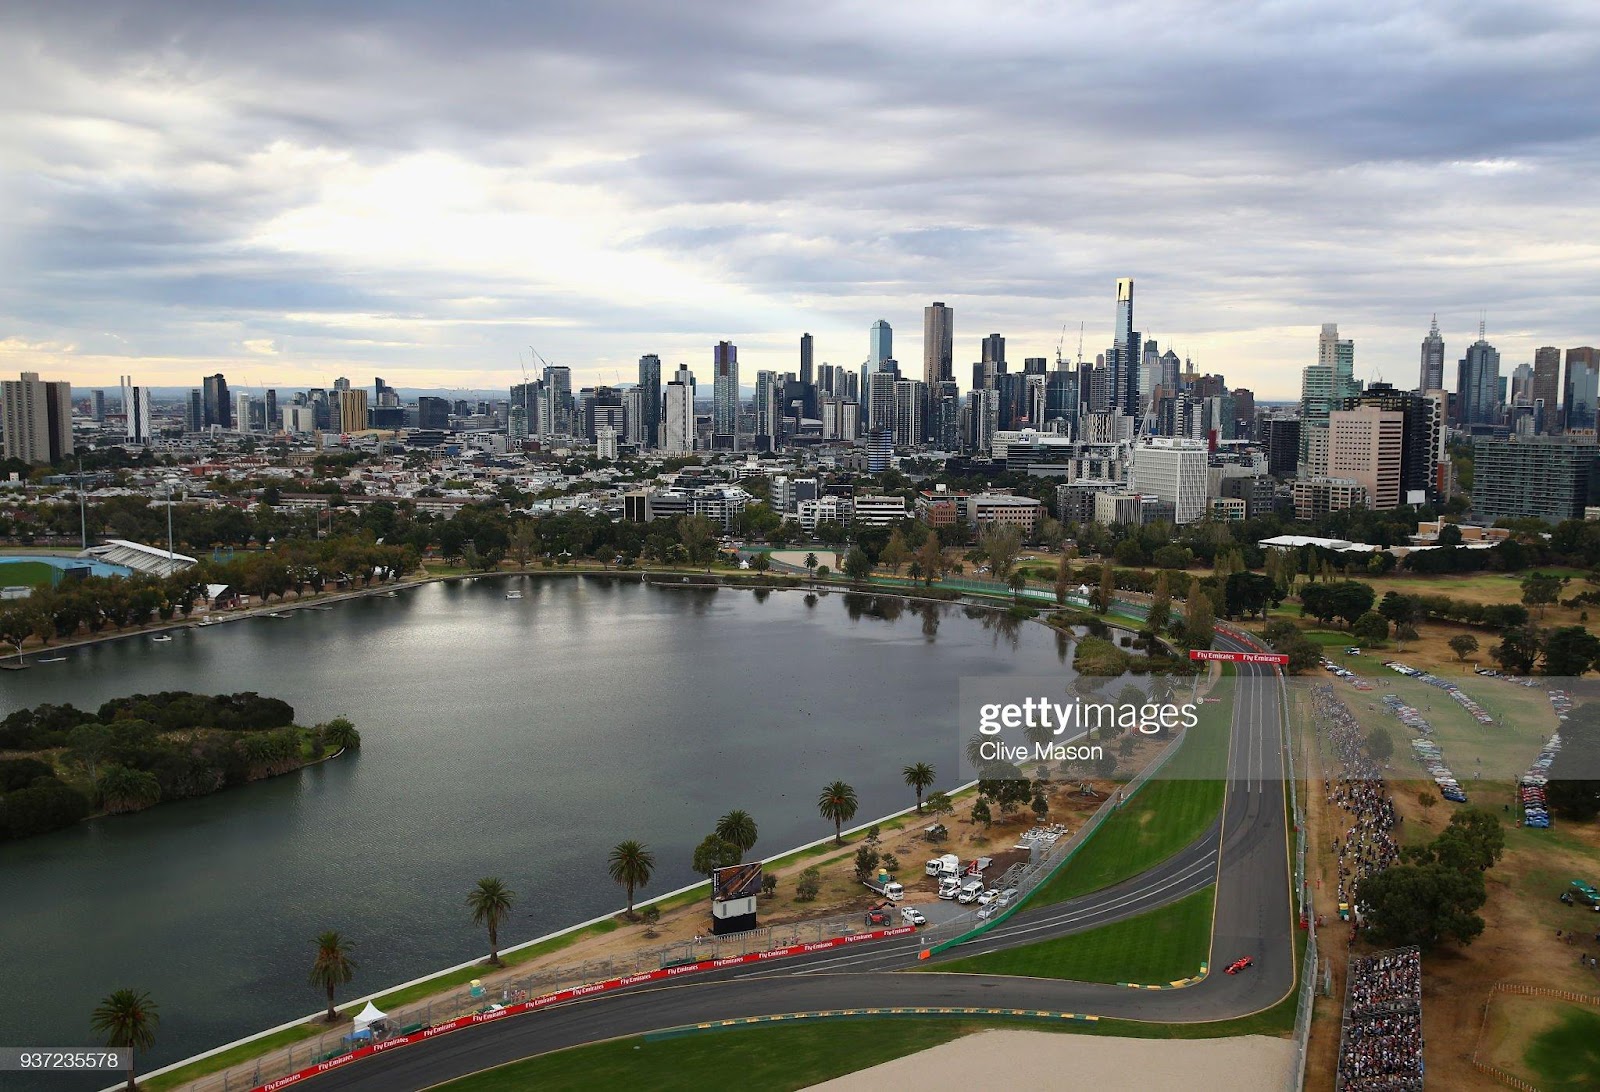 Kimi Raikkonen driving the (7) Scuderia Ferrari SF71H on track during qualifying for the Australian F1 Grand Prix at Albert Park on March 24, 2018 in Melbourne, Australia.